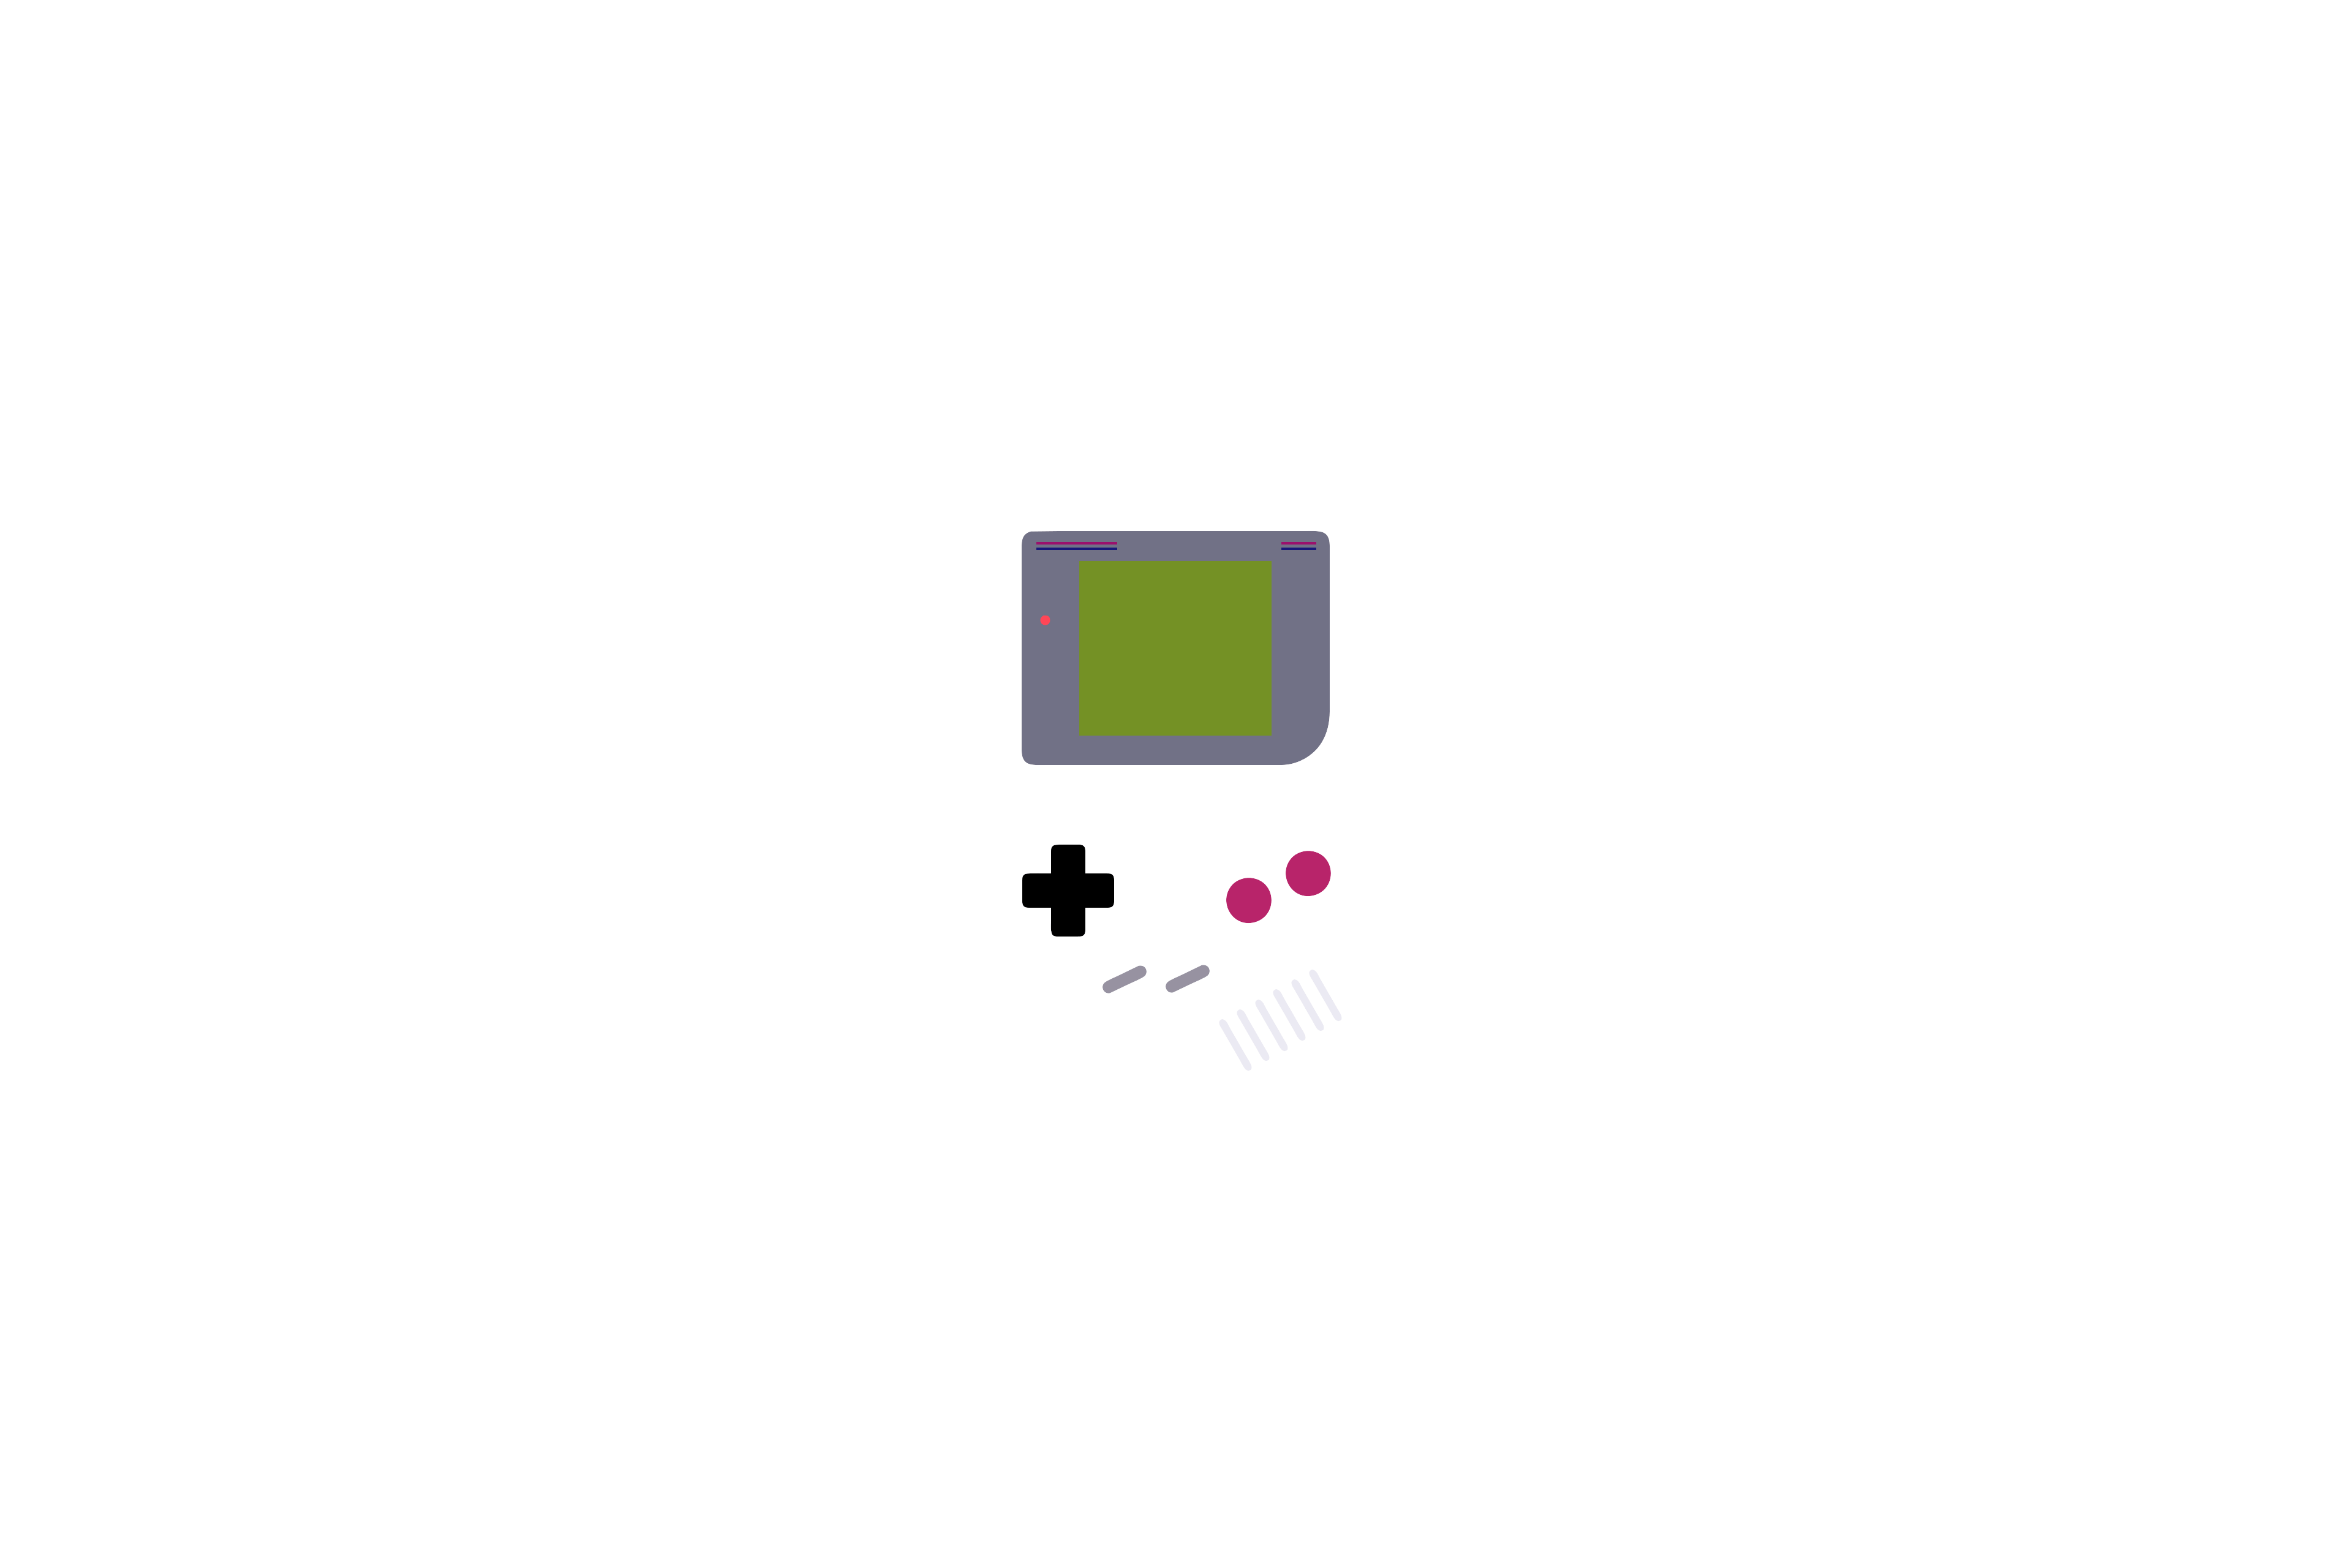 Game Boy Minimalism. Artist HD 4k Wallpaper